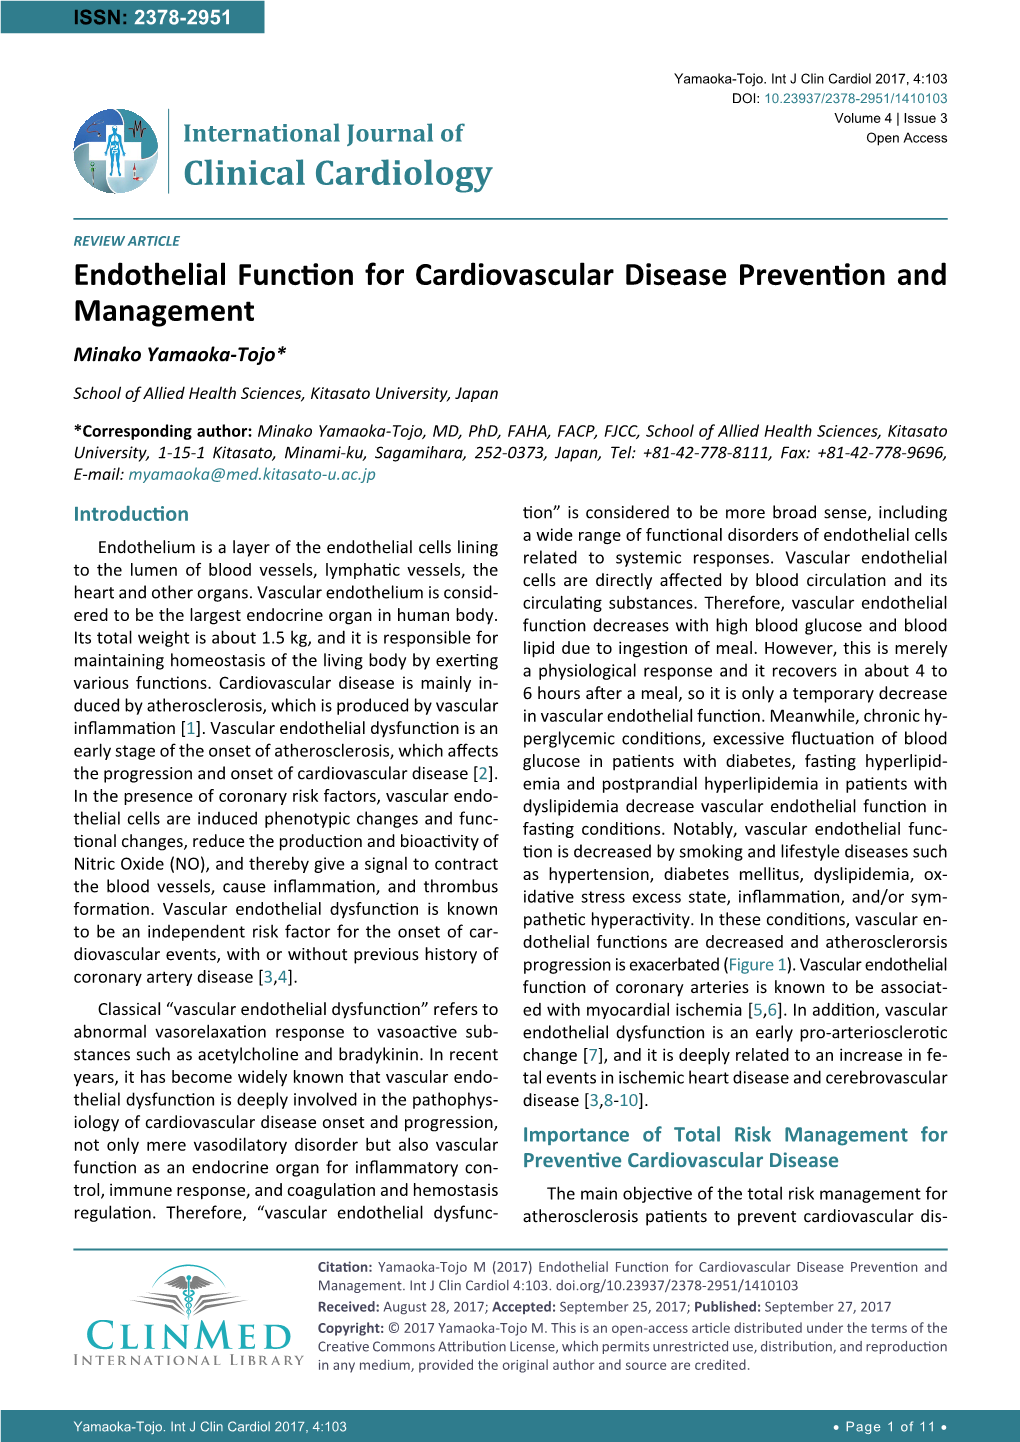 Endothelial Function for Cardiovascular Disease Prevention and Management Minako Yamaoka-Tojo*